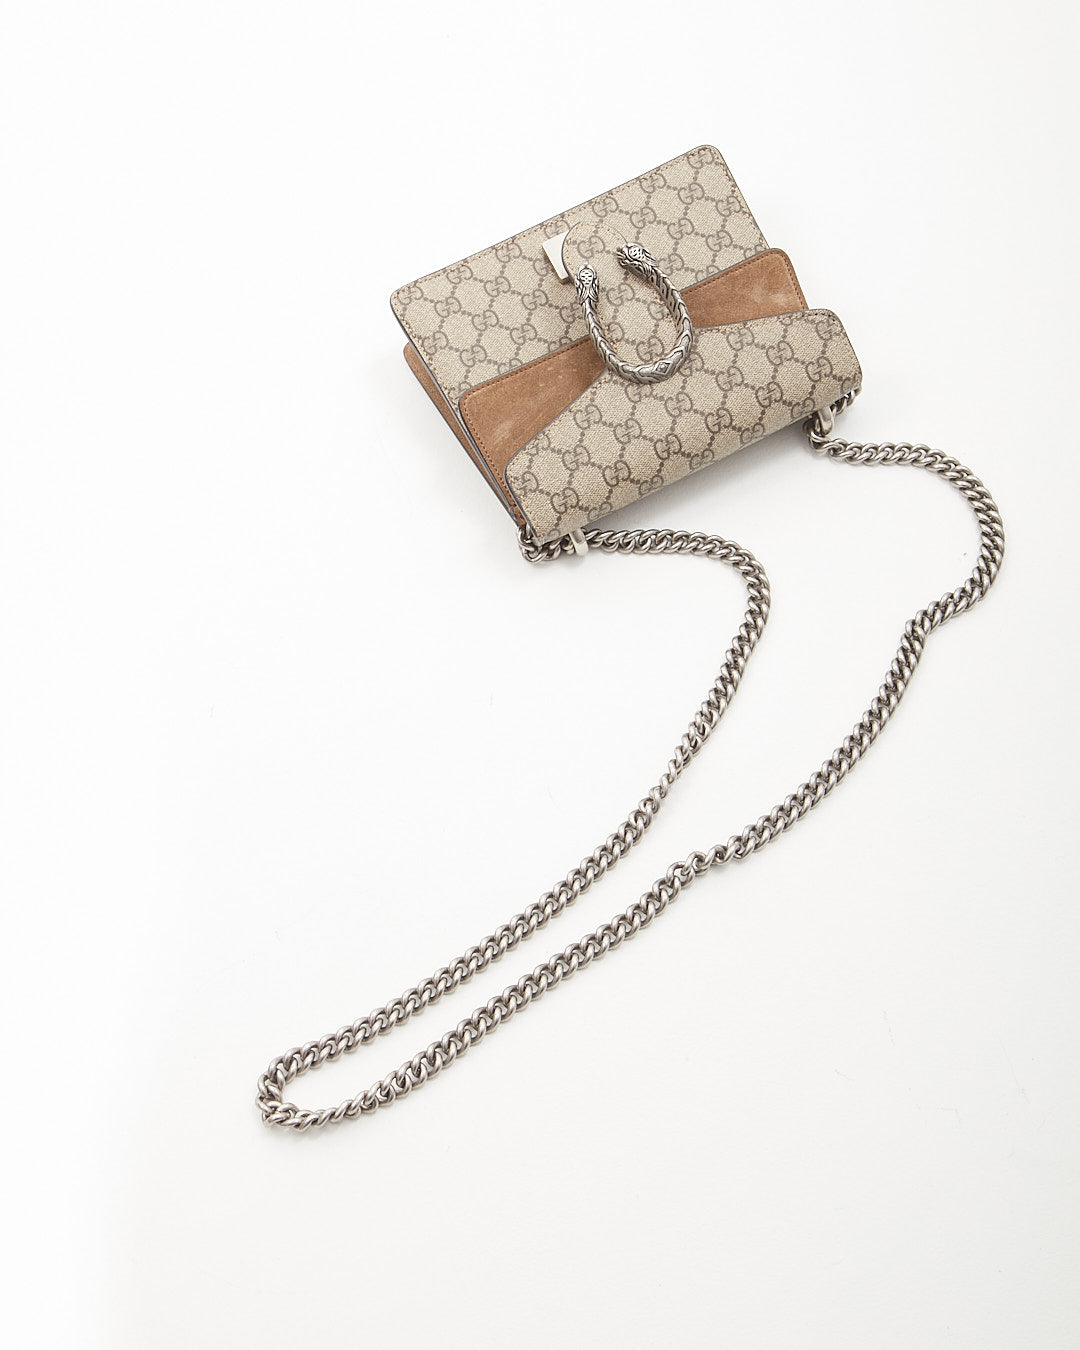 Gucci GG Supreme Canvas Small Dionysus Crossbody Chain Bag